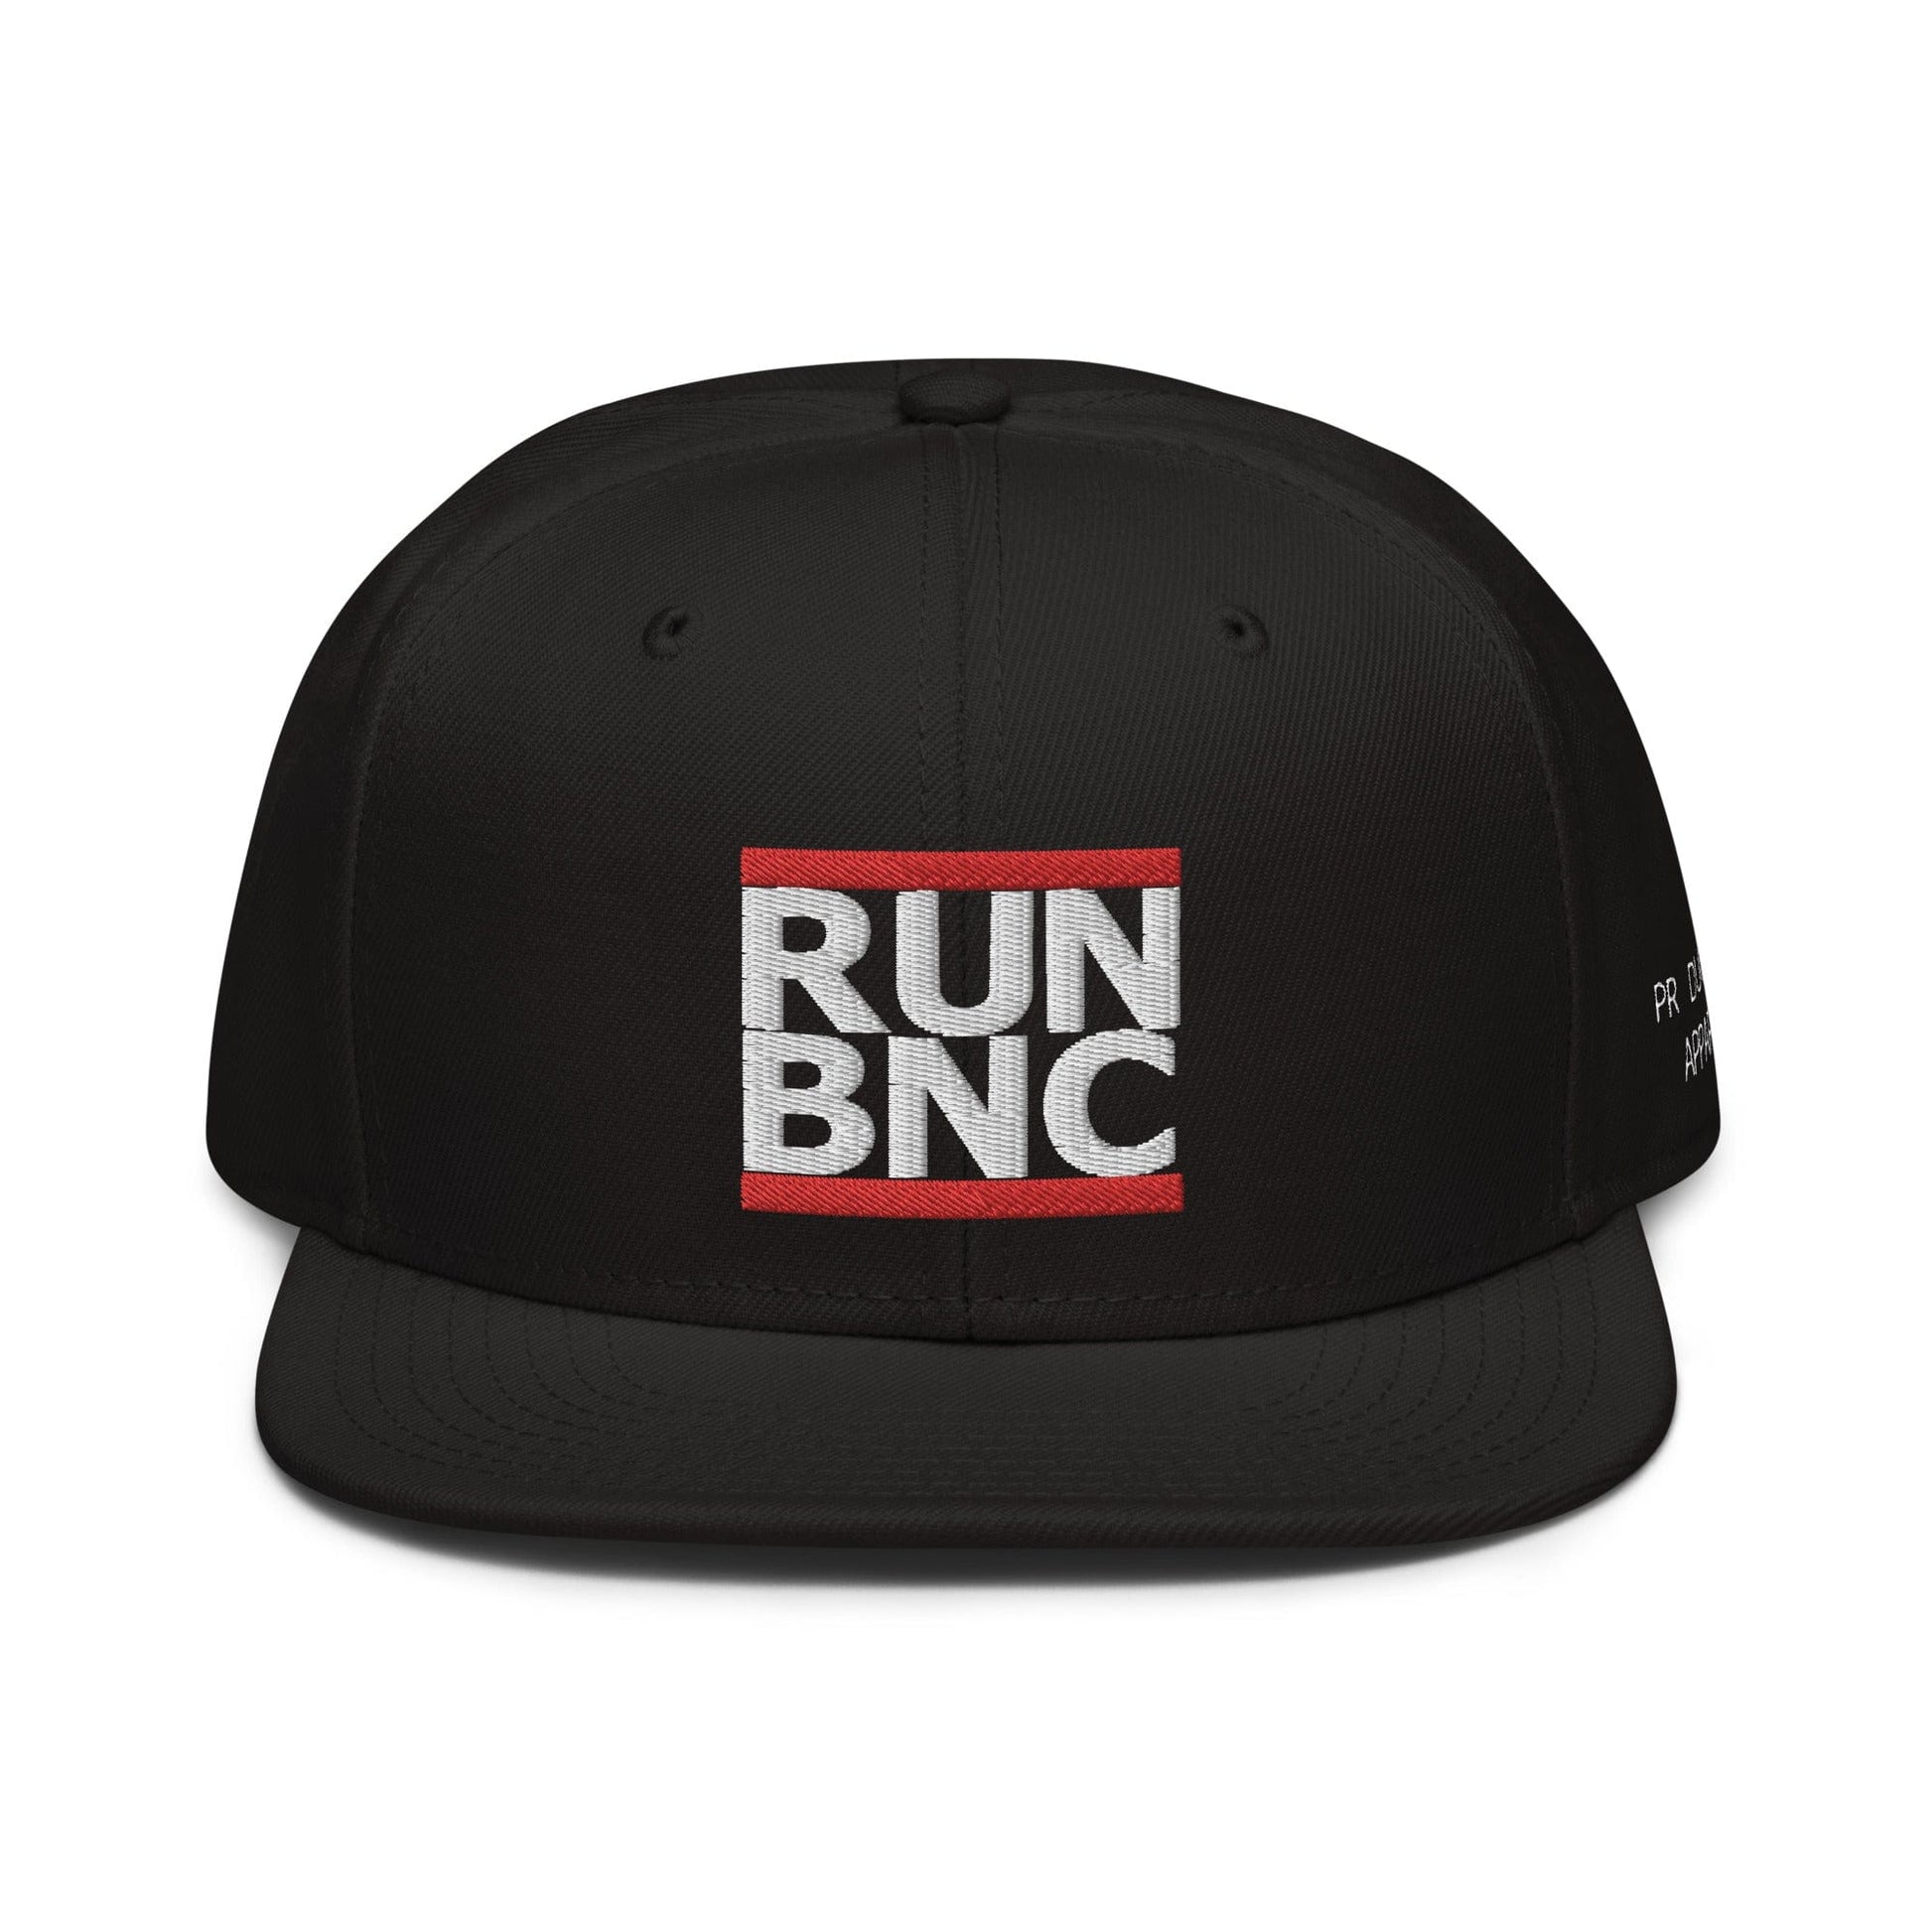 Production Apparel RUN BNC Hat Black